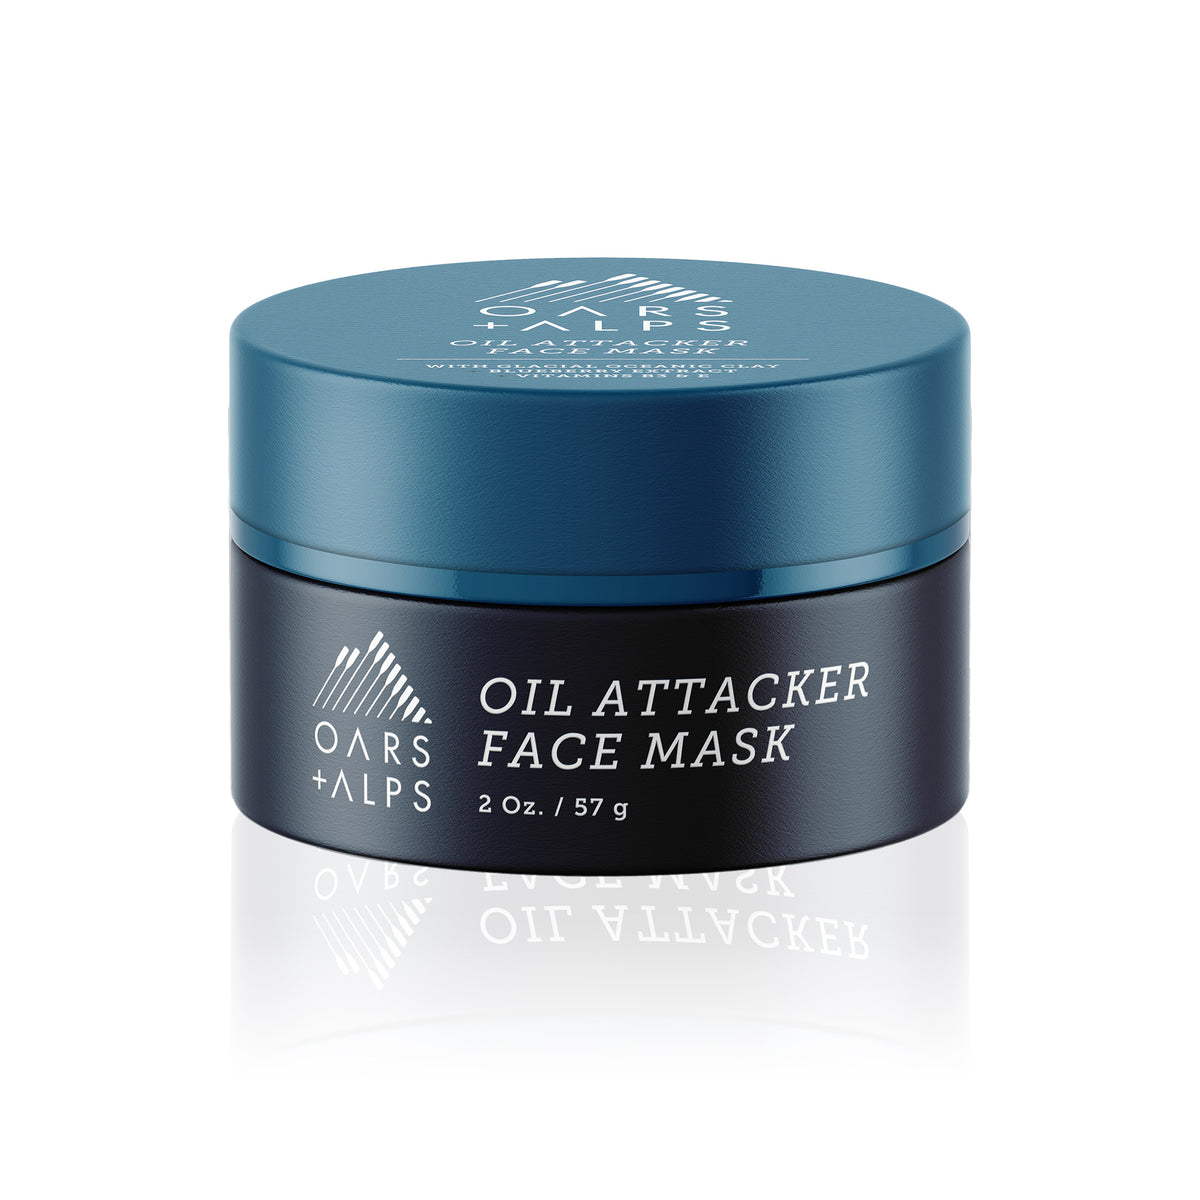 Men's Bentonite Clay Mask: Pore-Cleansing Face Mask